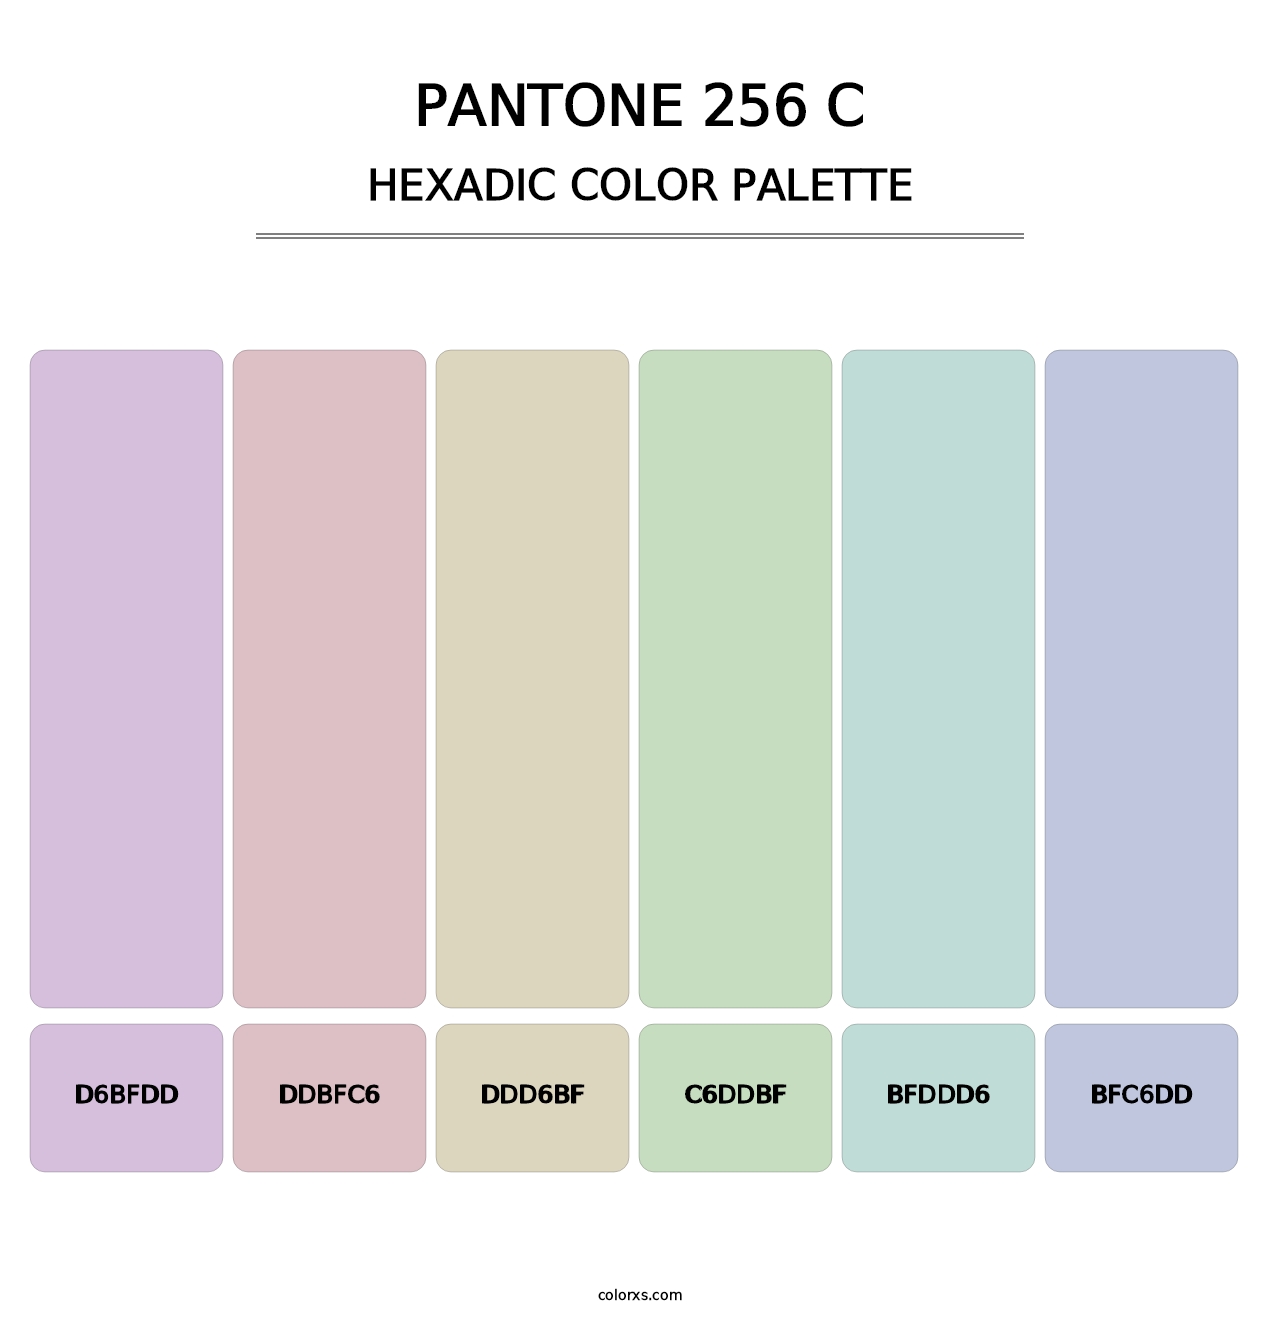 PANTONE 256 C - Hexadic Color Palette